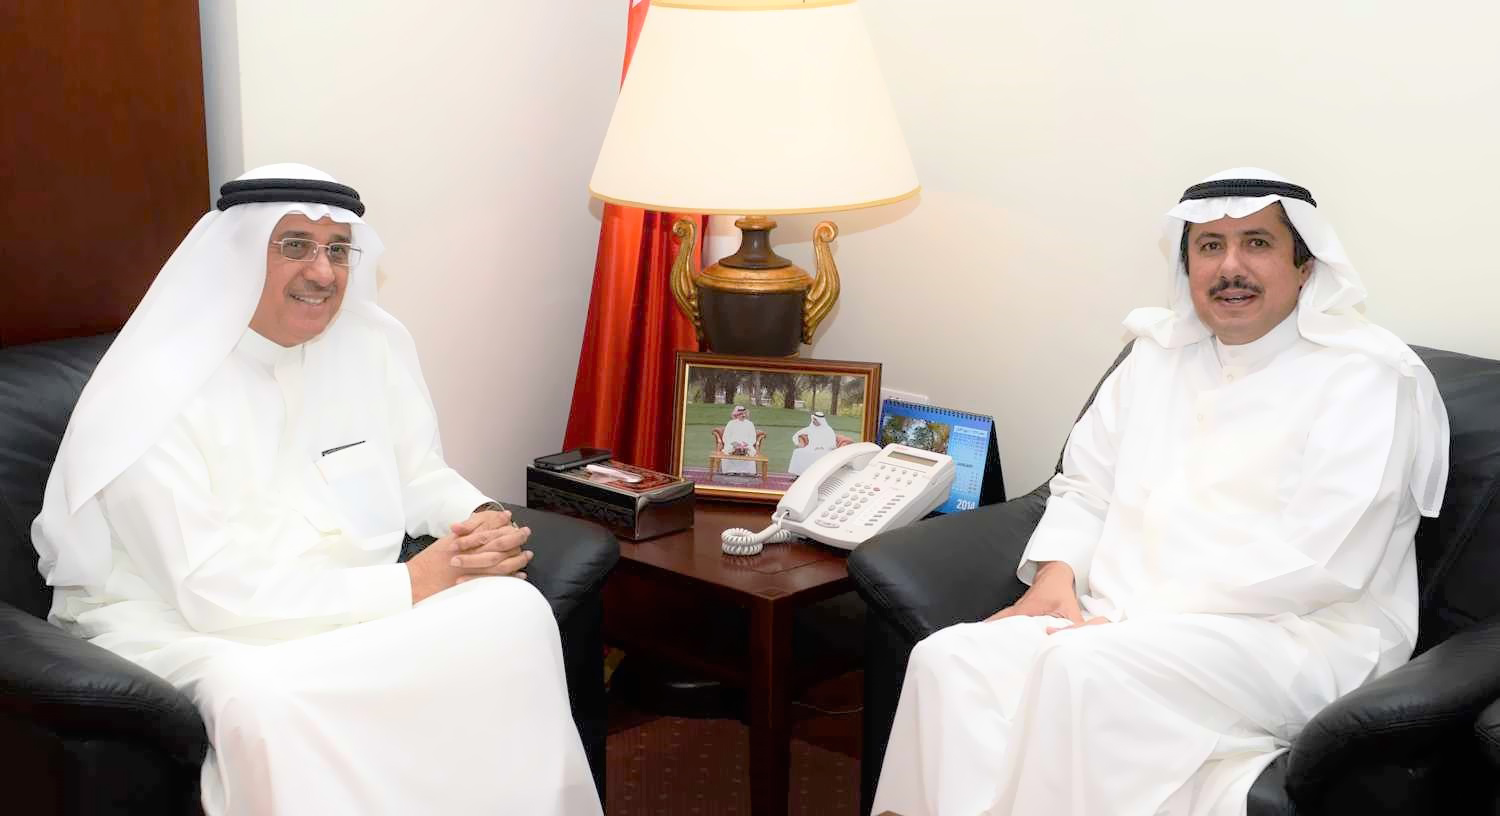 the King of Bahrain's Advisor for Media Affairs Nabil Al-Hamar with Kuwaiti Ambassador to Bahrain Sheikh Azzam Al-Sabah